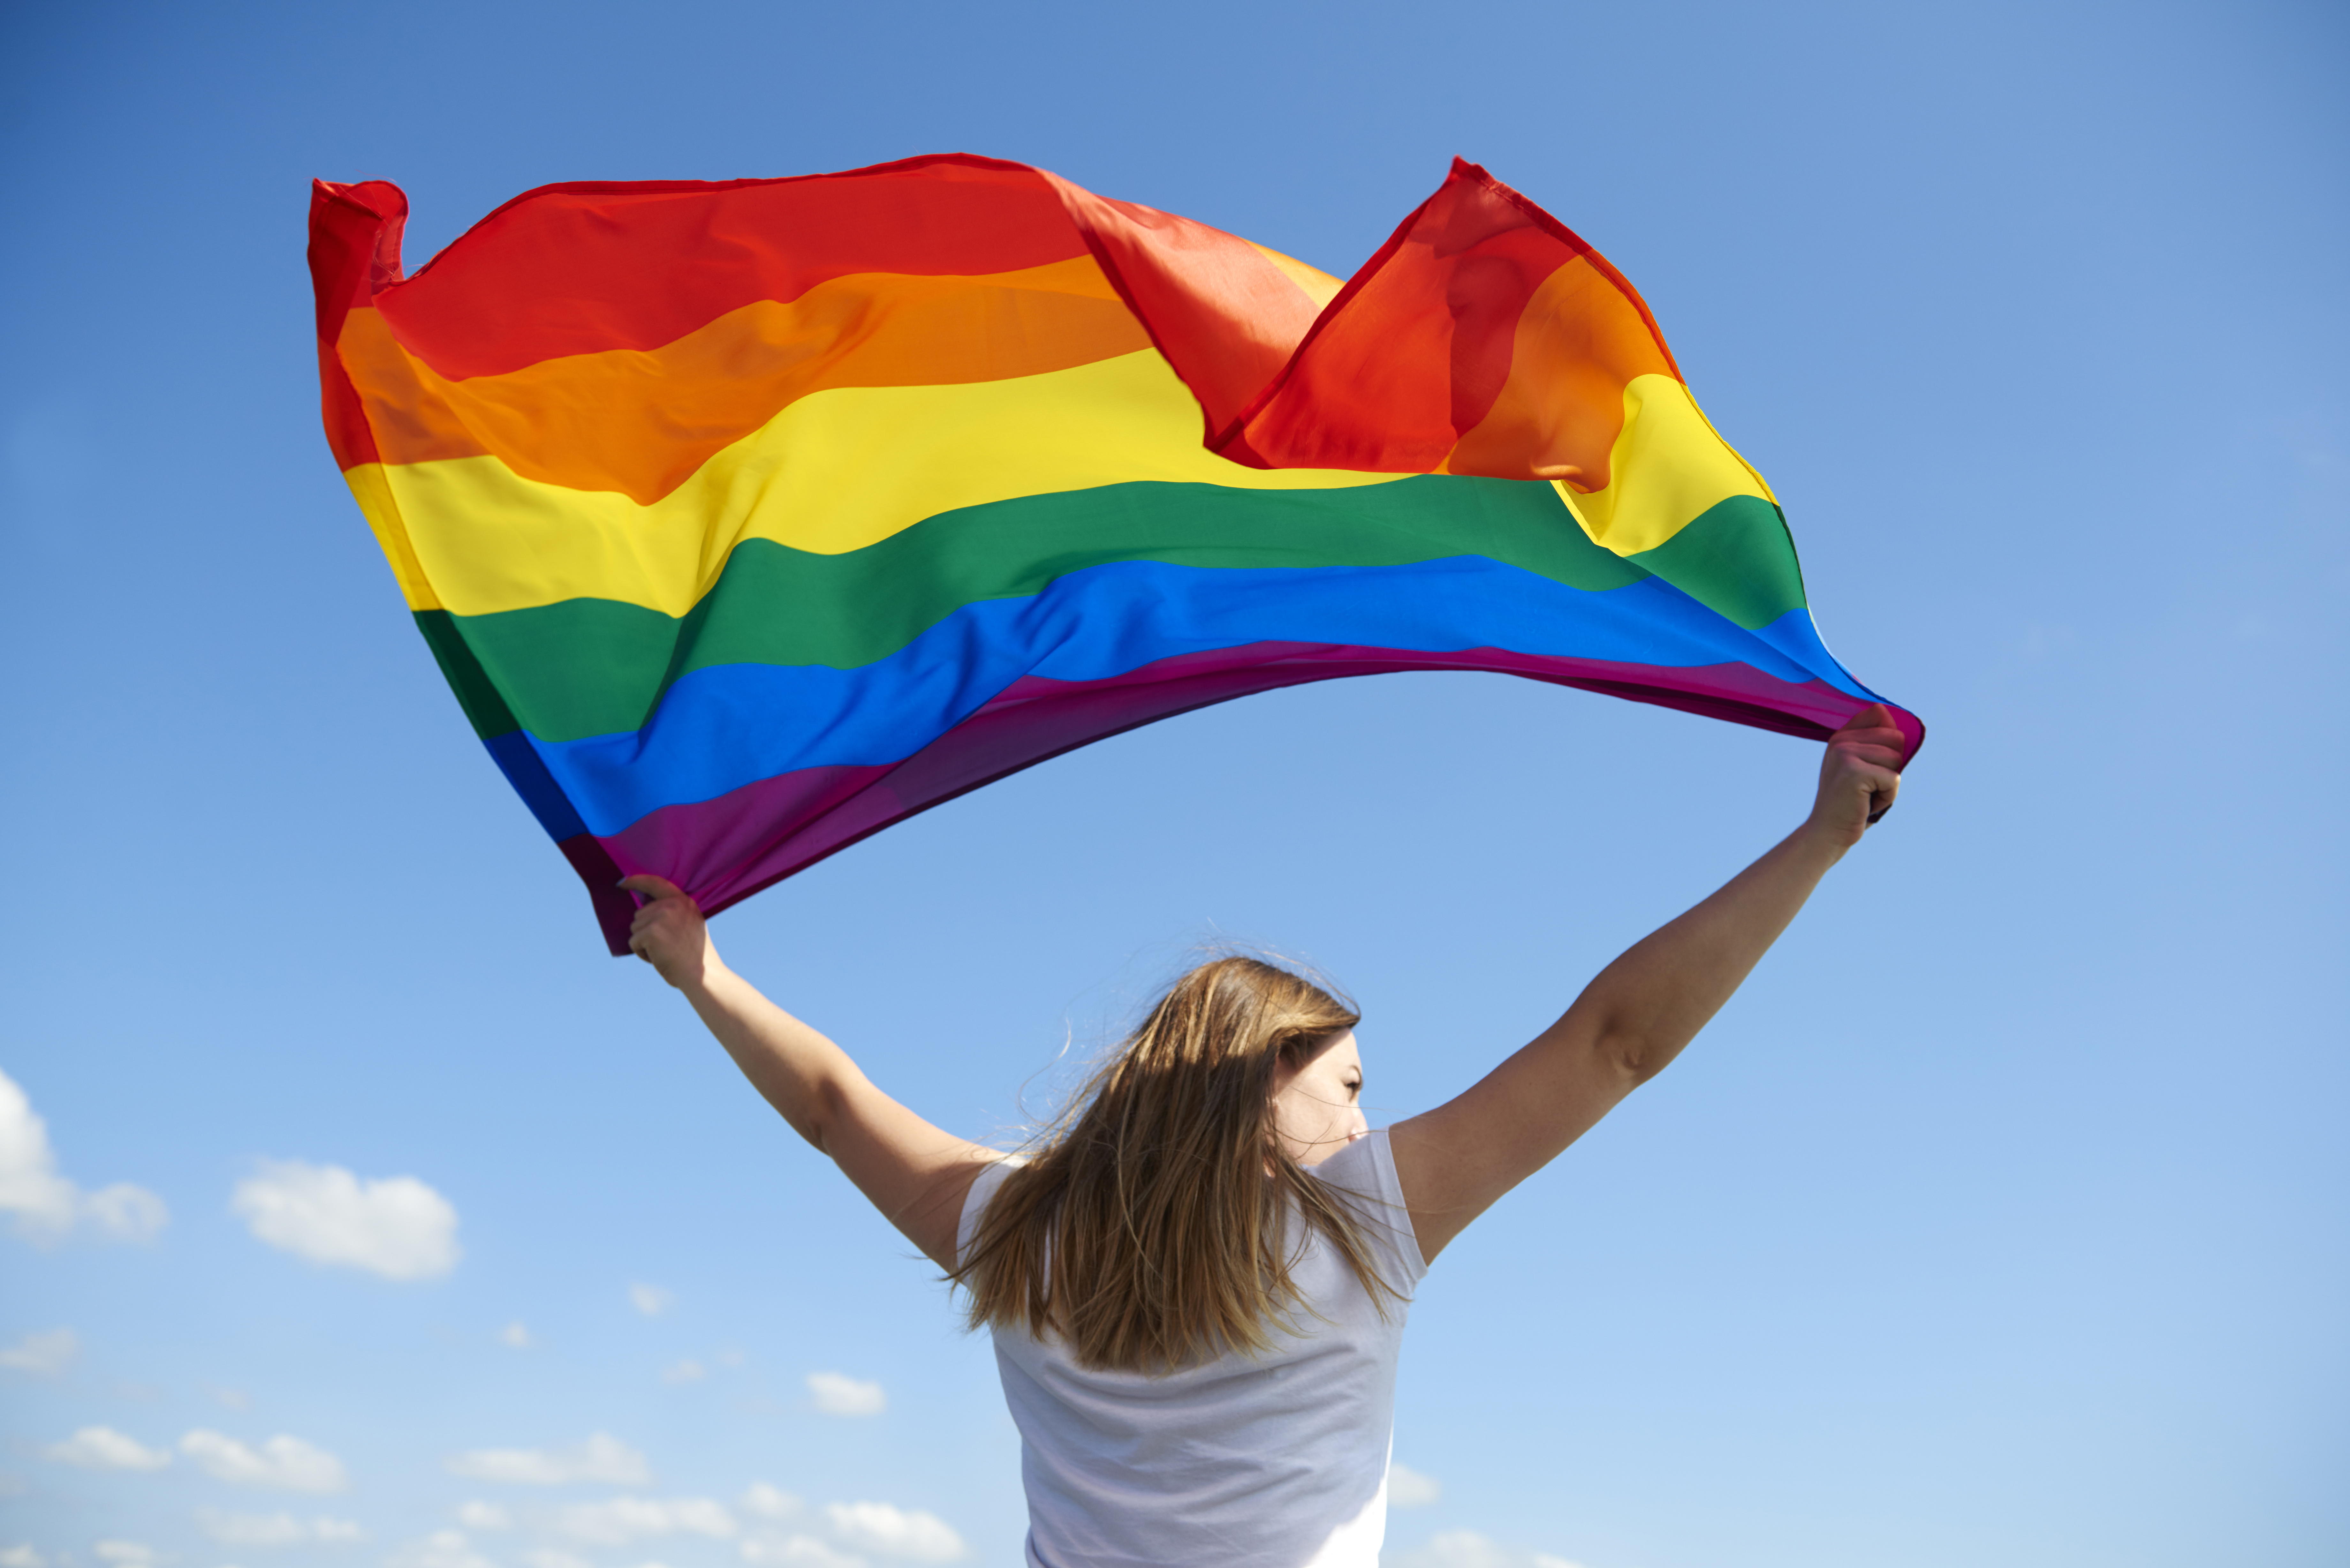 https://4800530.fs1.hubspotusercontent-na1.net/hubfs/4800530/rear-view-young-woman-waving-rainbow-flag.jpg